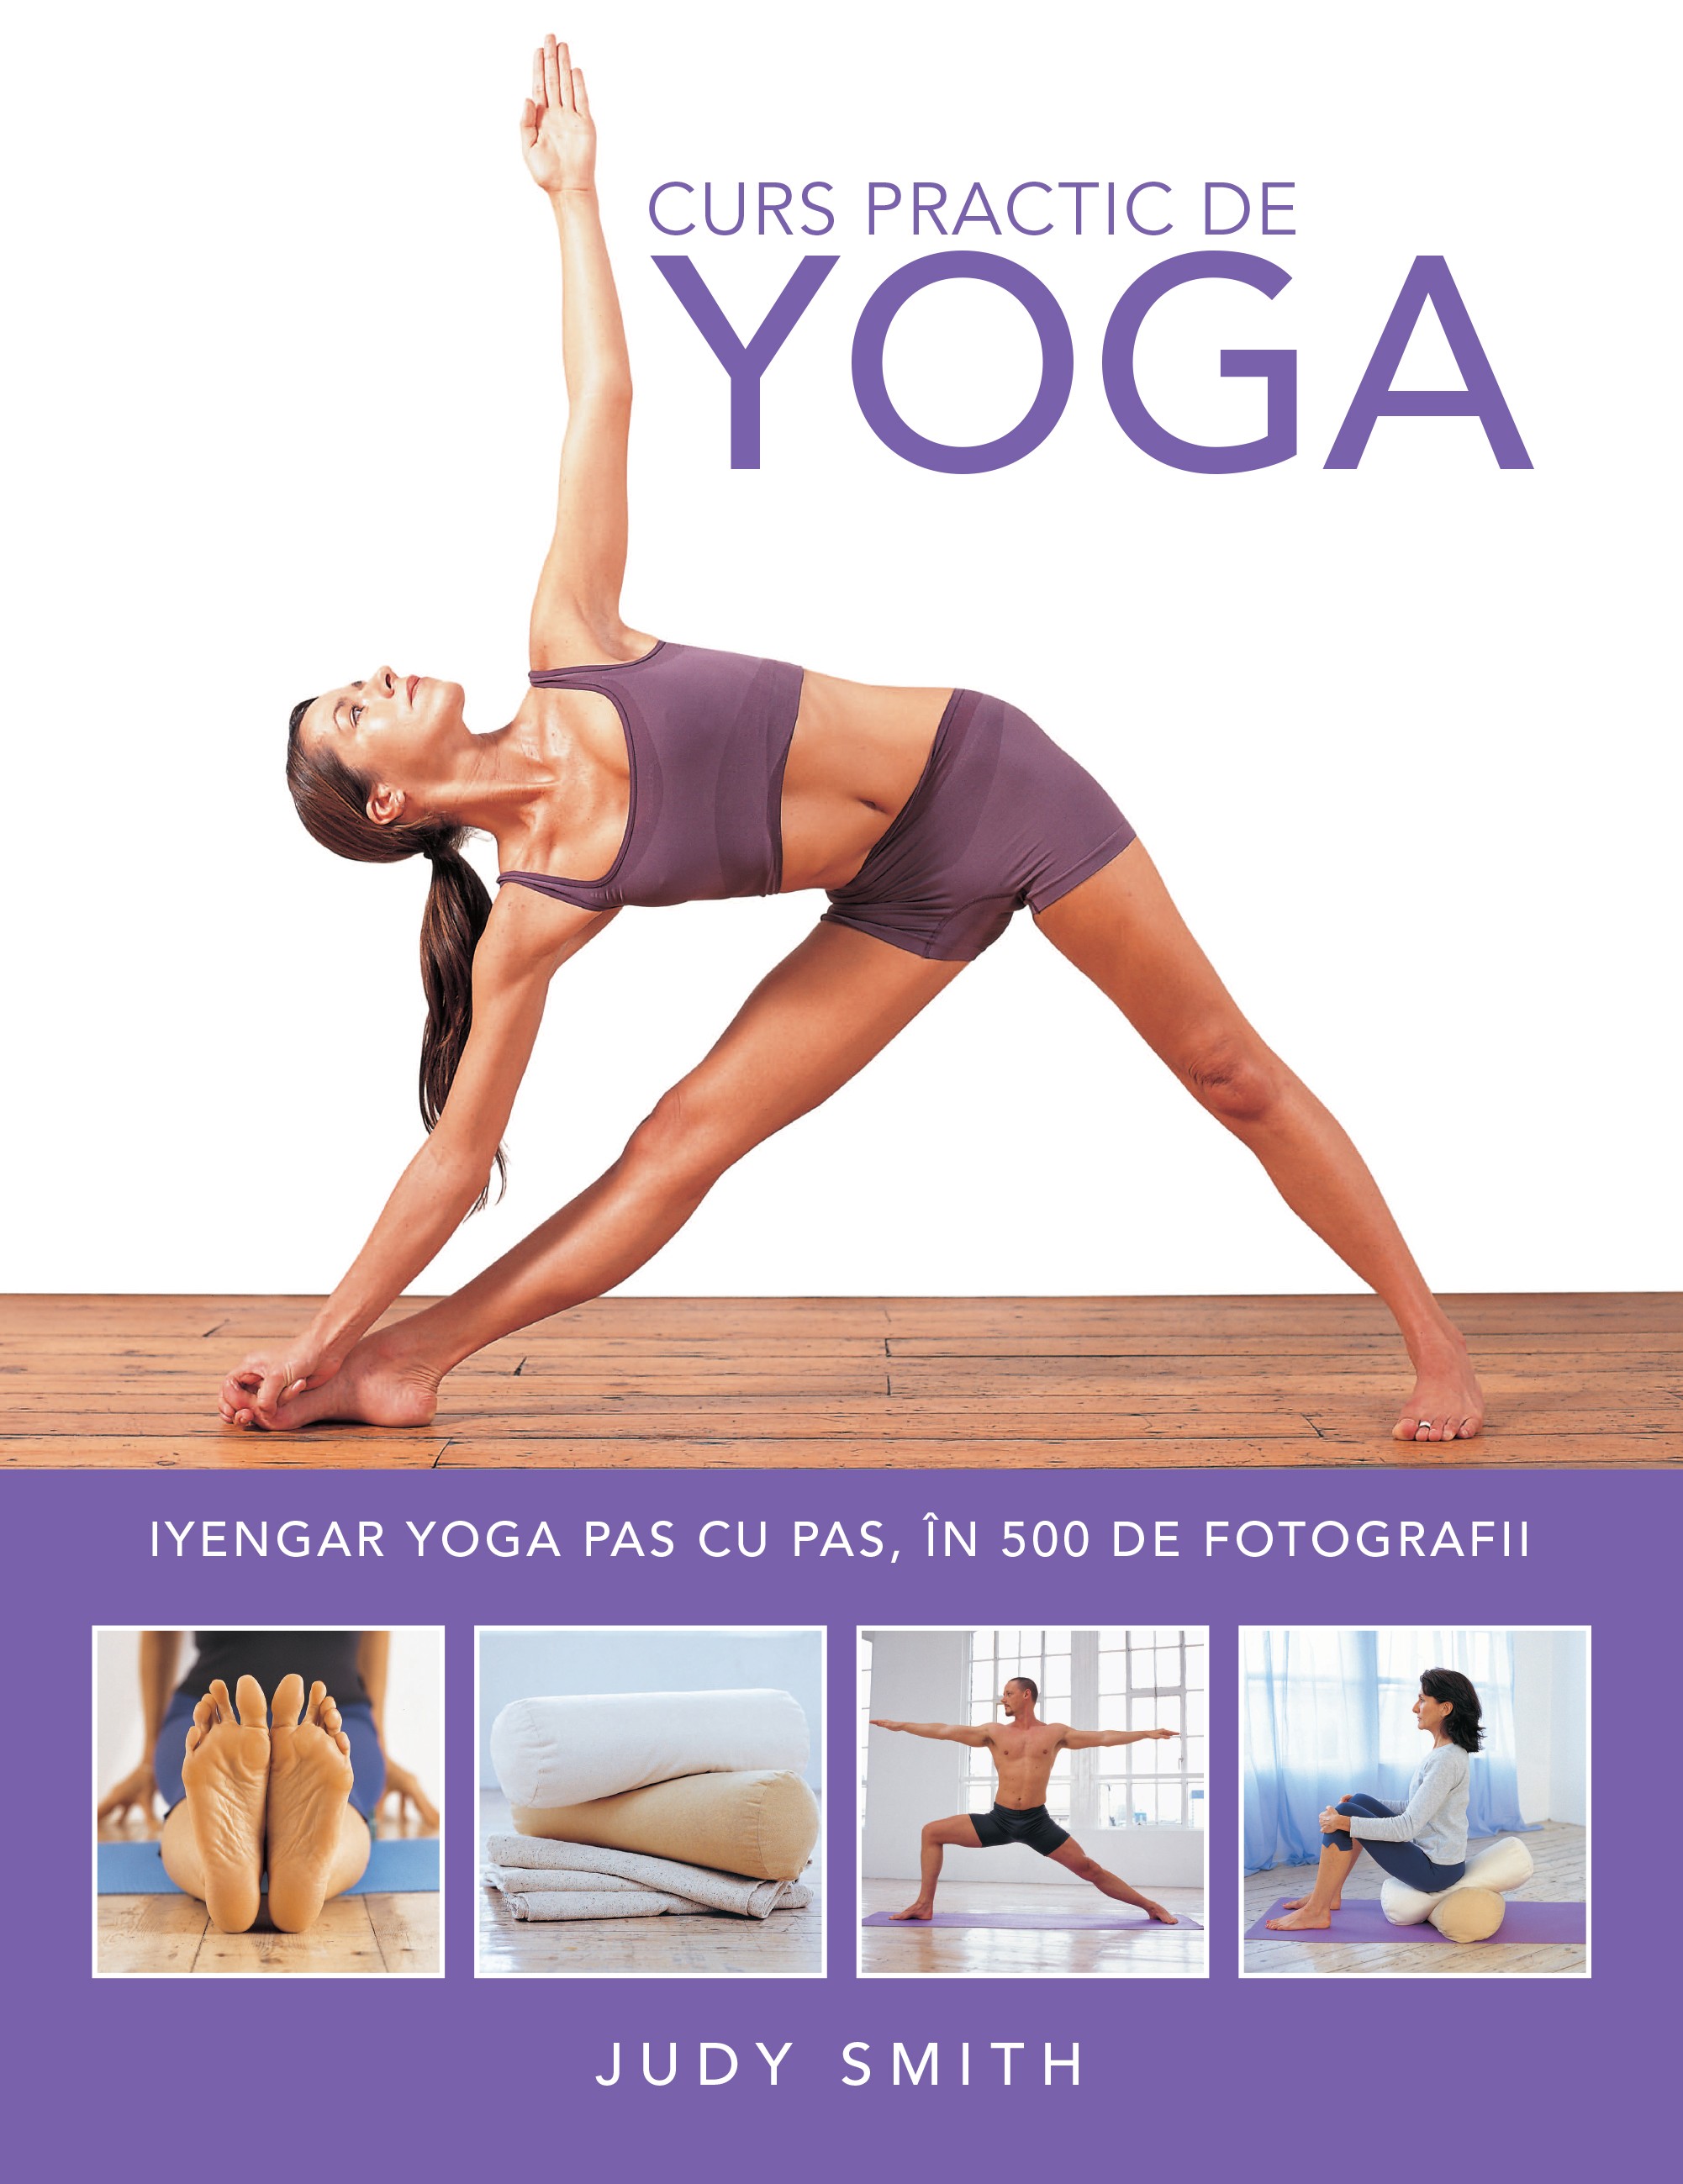 Curs practic de Yoga - Judy Smith